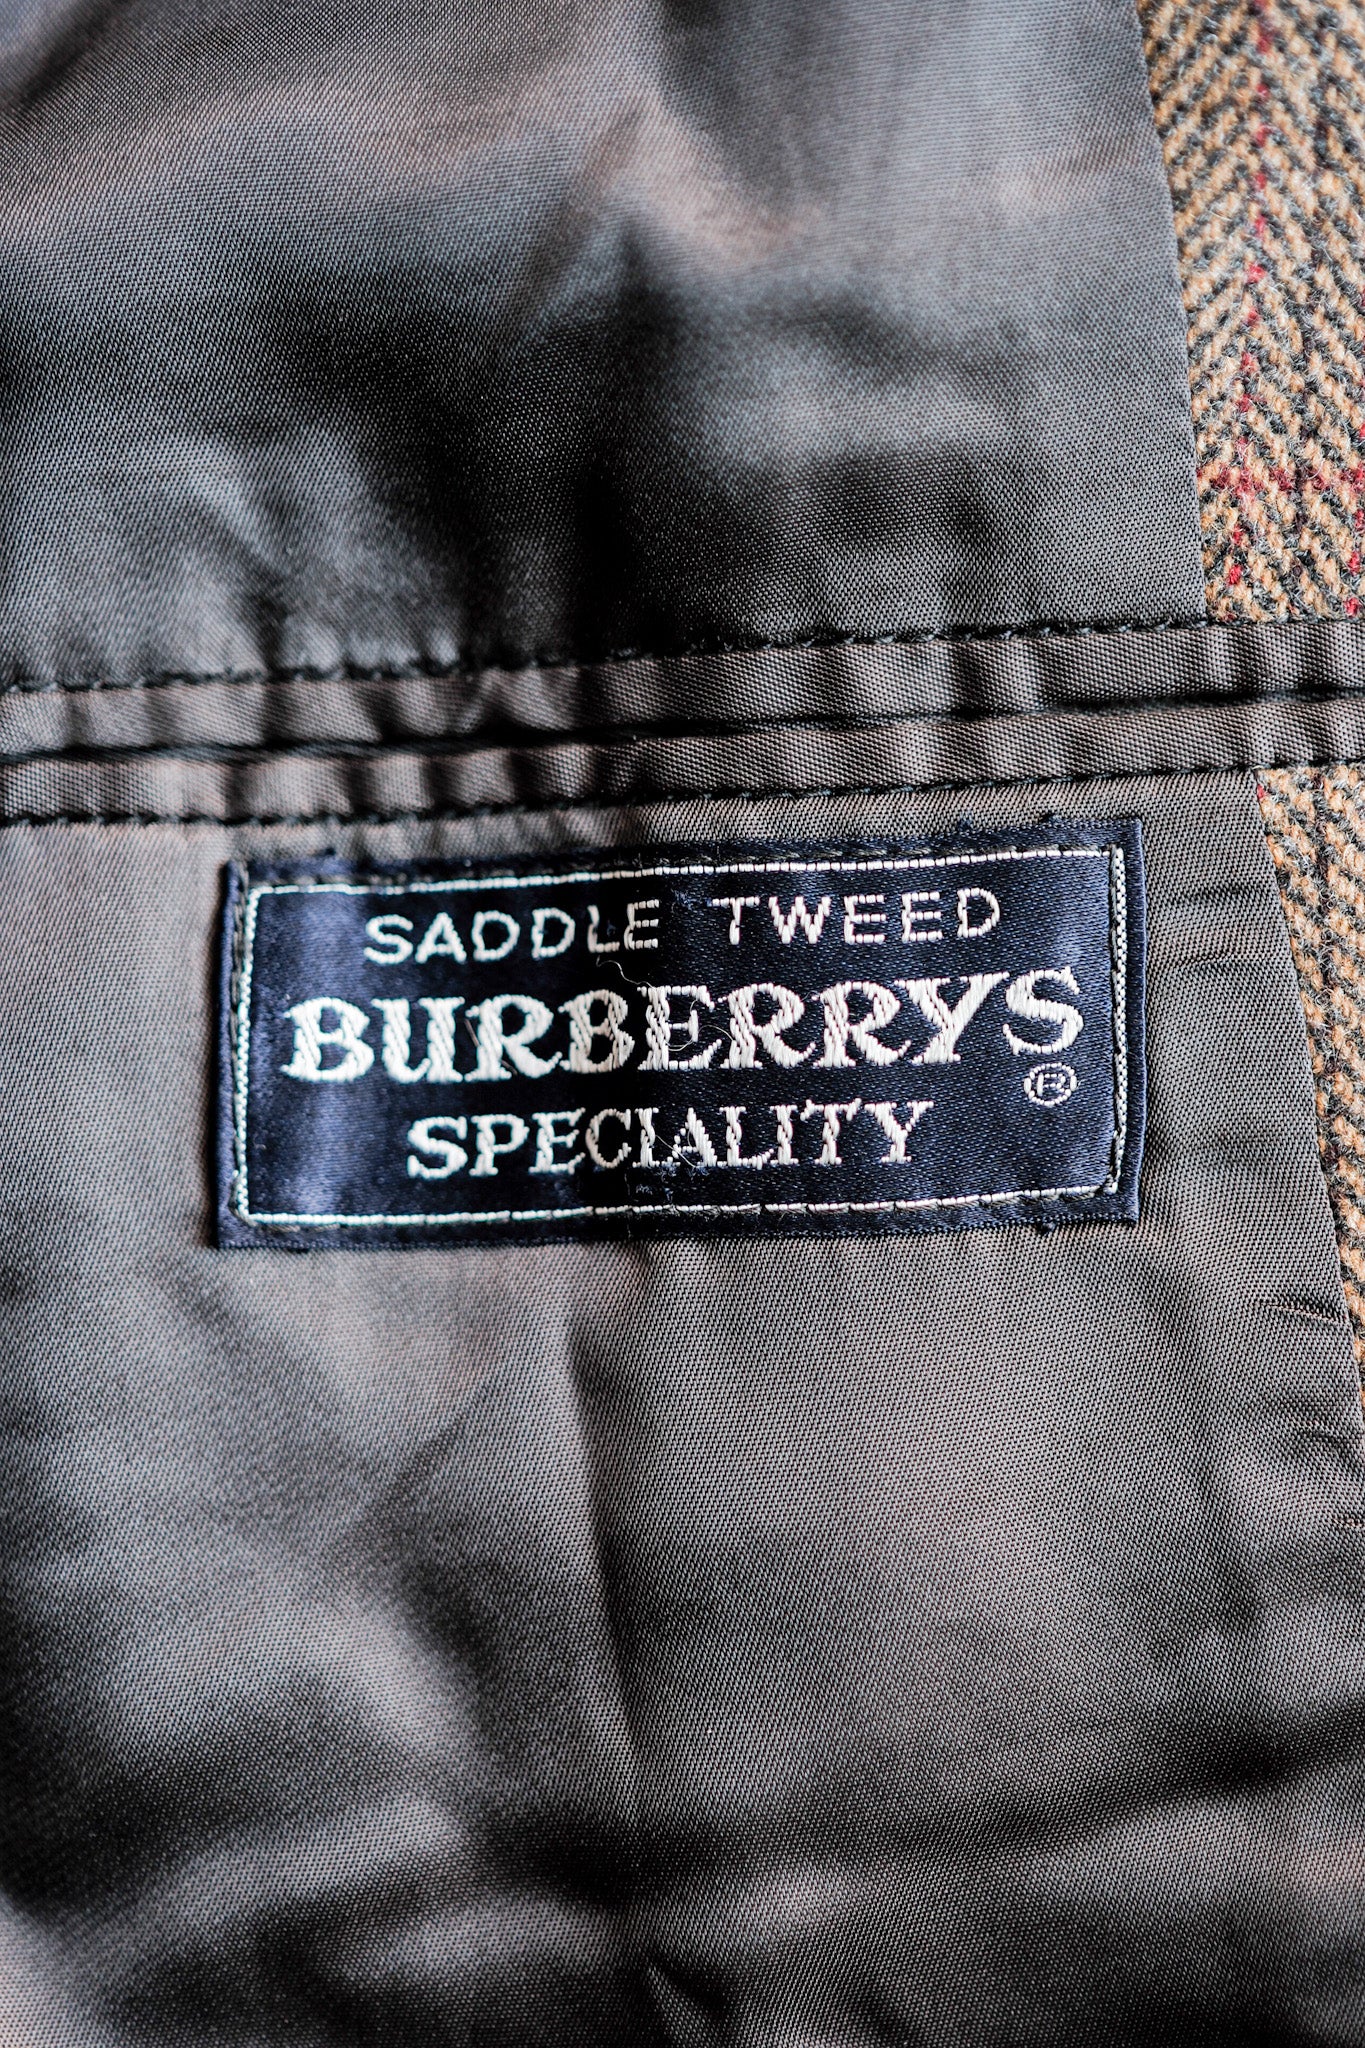 [~ 80's] Vintage Burberrys Single Ragle Raglen HBT Wool Balmacaan COAT SIZE.38R "Saddle Tweed" "Hespen Mode-Sport Bremen.